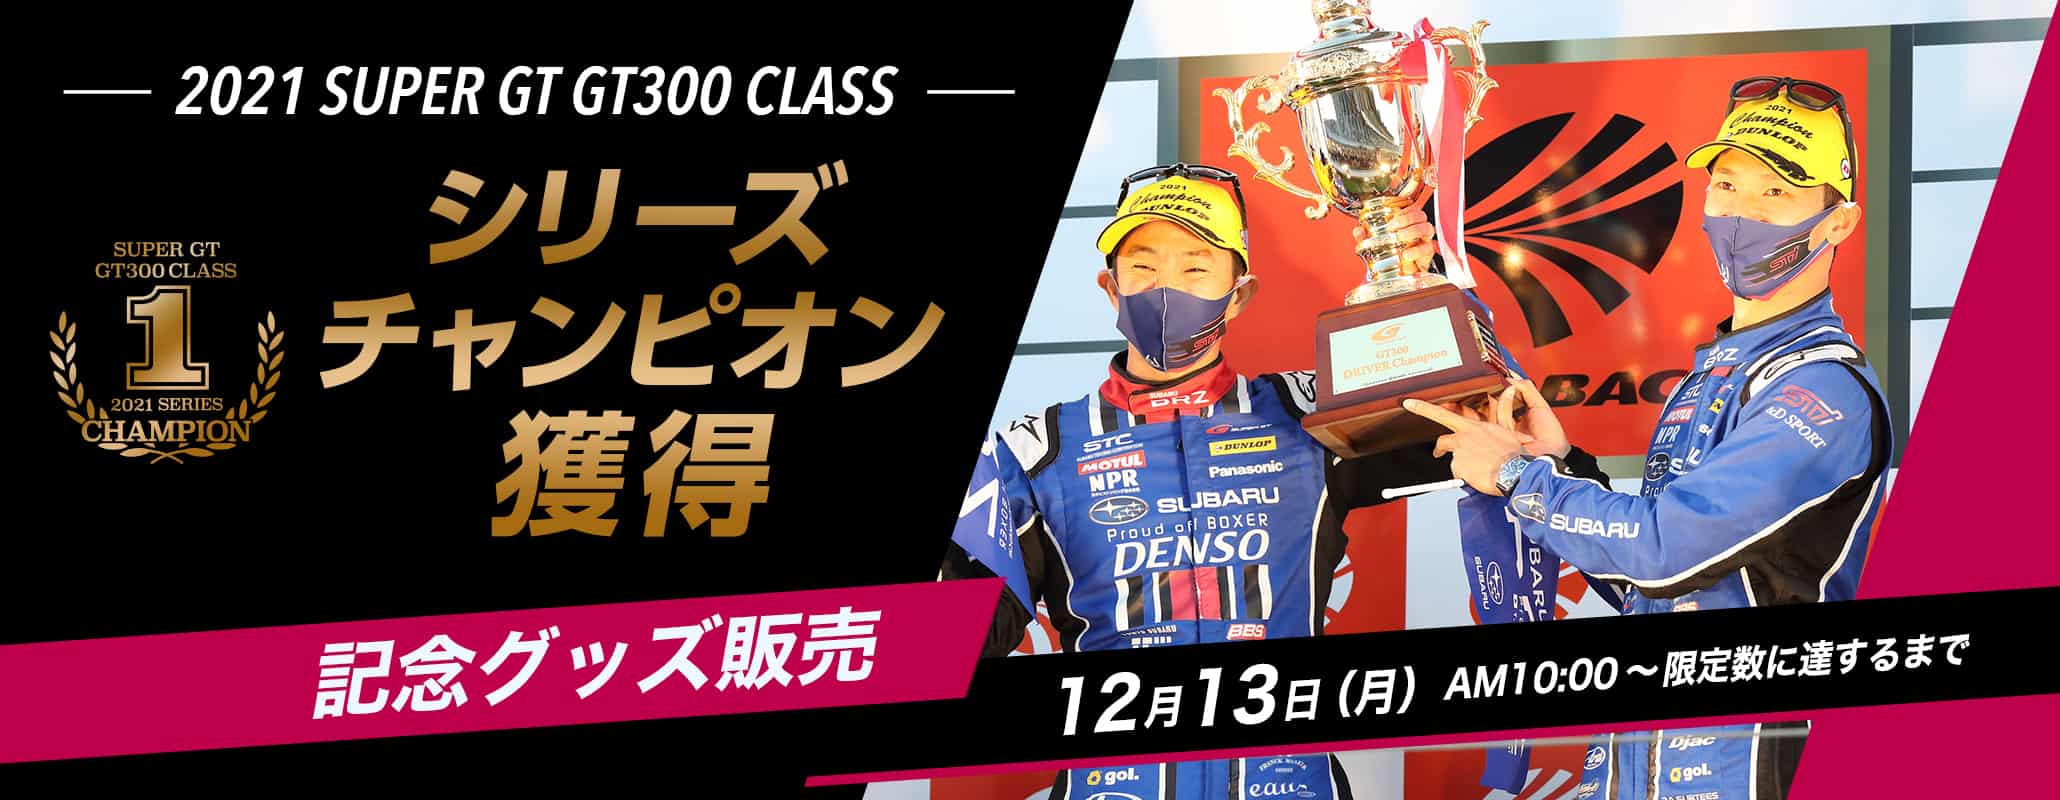 2021 SUPER GT GT300 CLASS シリーズチャンピオン獲得記念グッズ販売